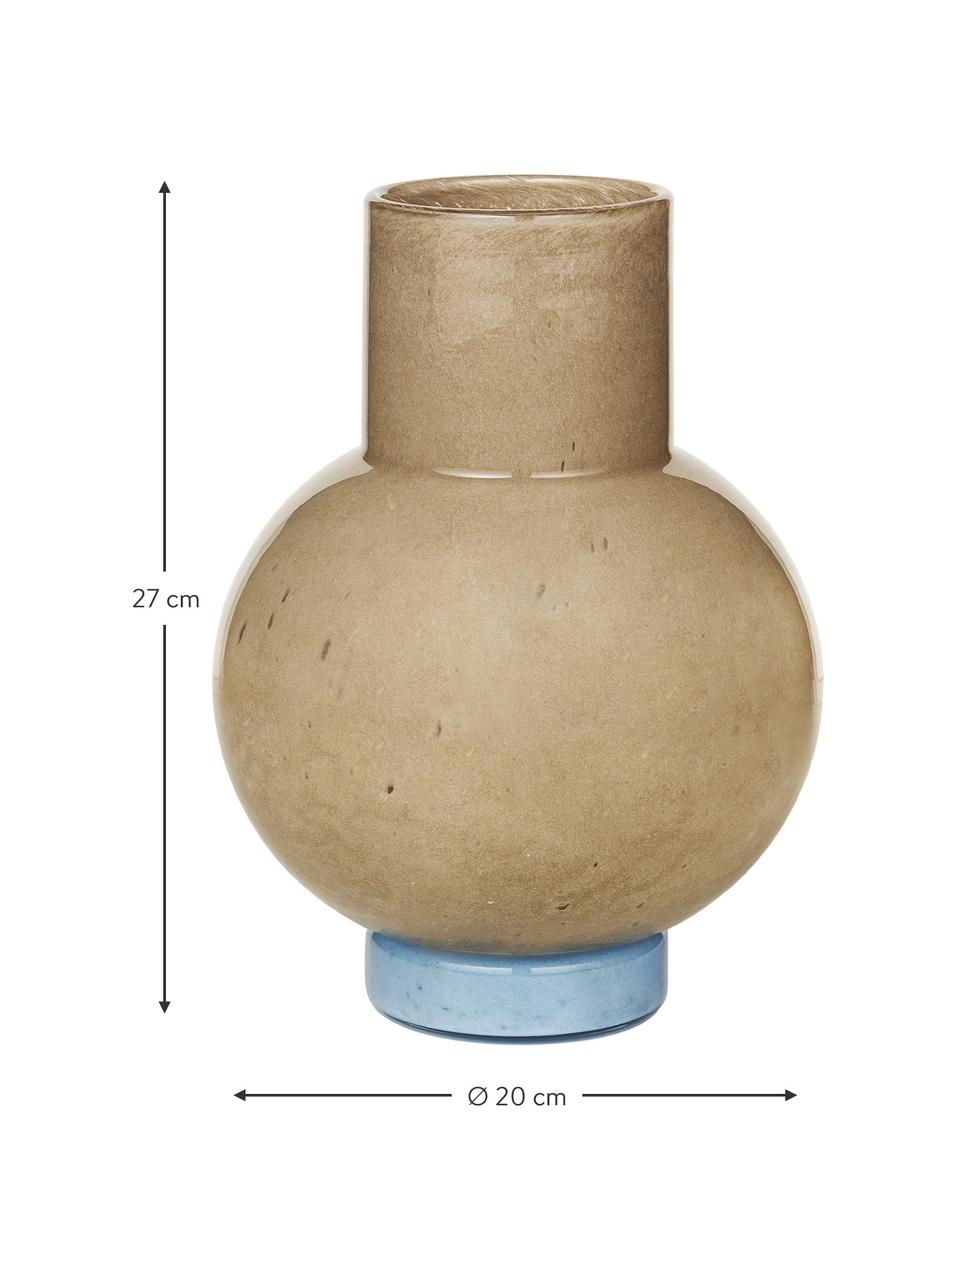 Mundgeblasene Vase Mari in Beige/Blau, Glas, mundgeblasen, Beige, Blau, 14 x 27 cm